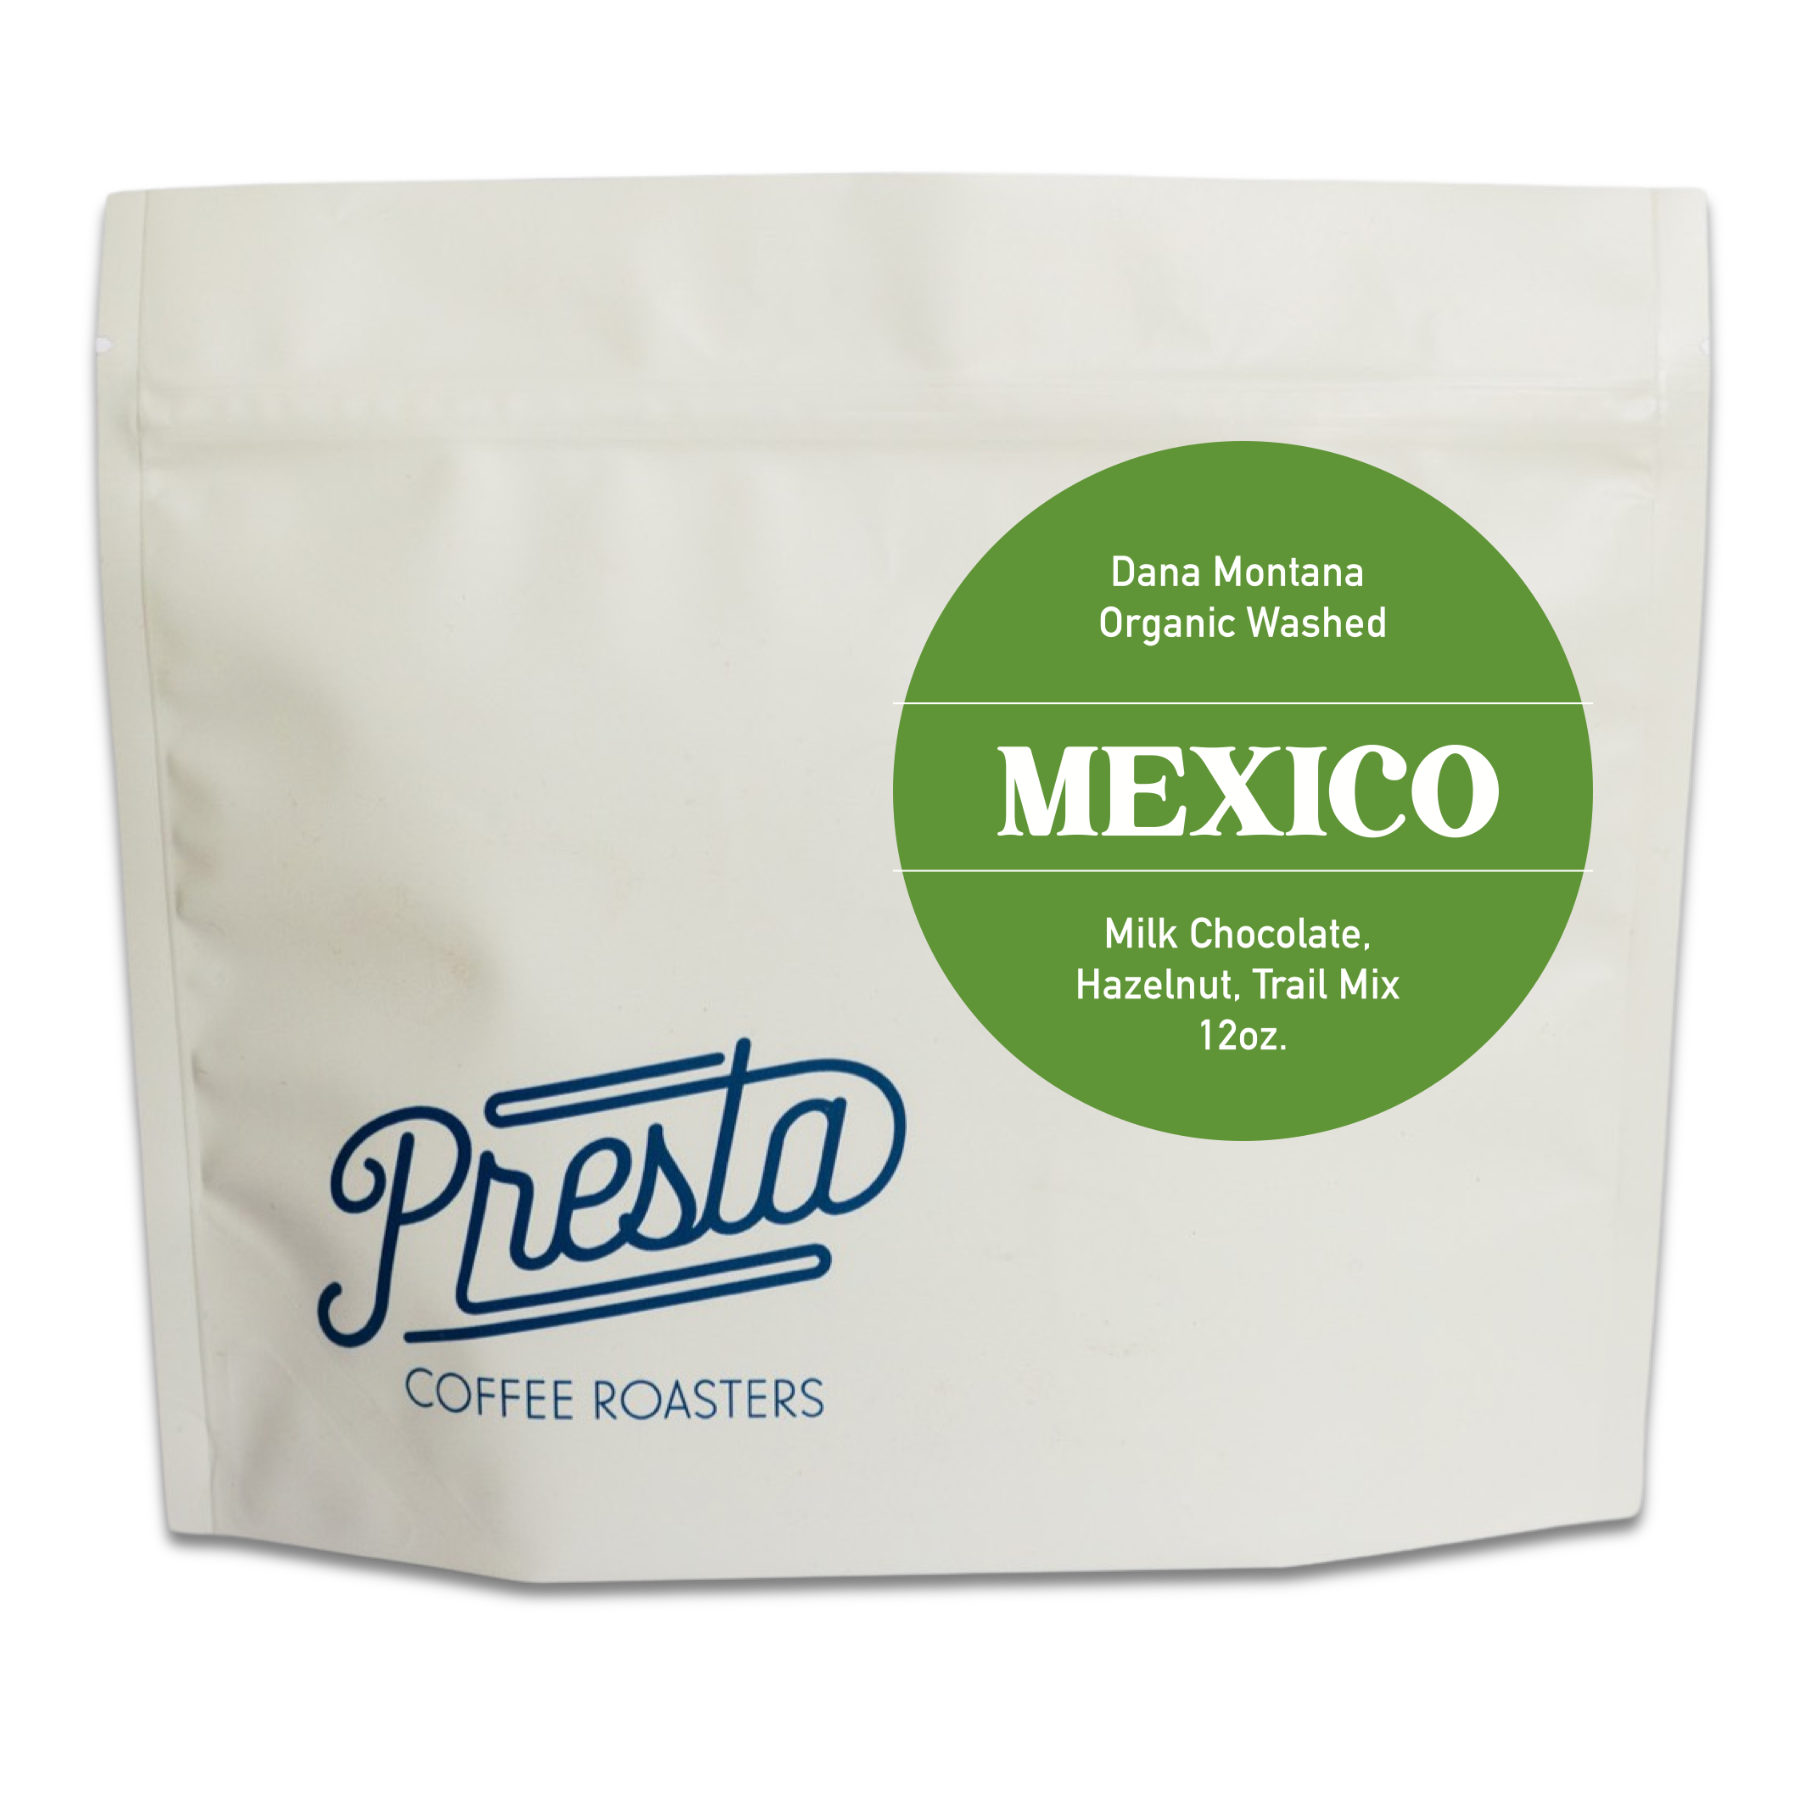 Mexico - Dana Montana - Organic Washed